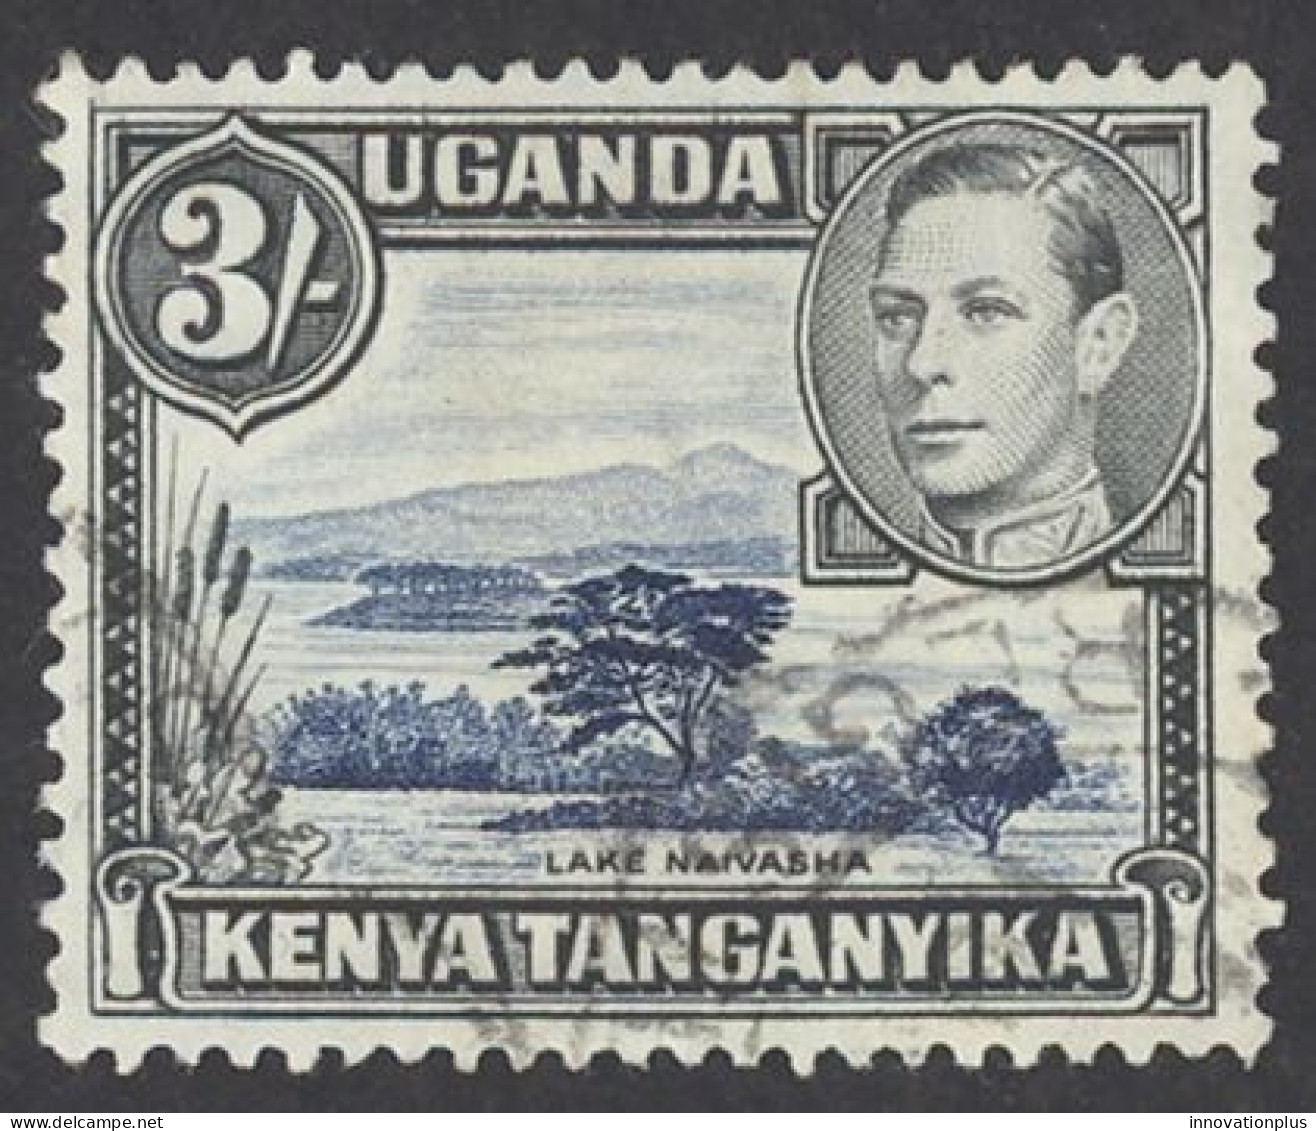 Kenya, Uganda, Tanzania Sc# 82 Used 1950 3sh King George VI Scenes  - Kenya, Oeganda & Tanzania